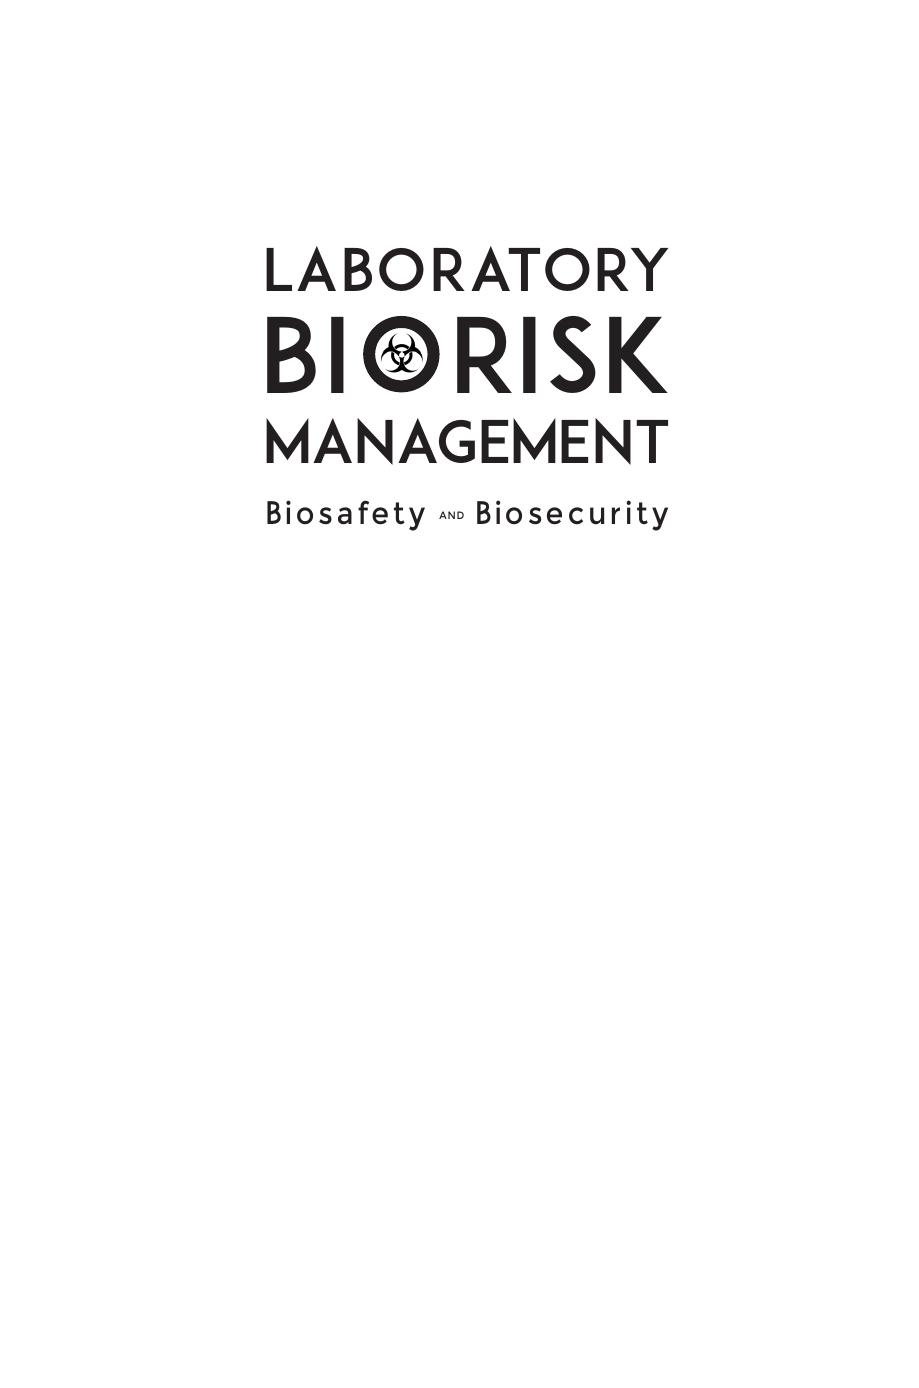 Laboratory Biorisk Management  Biosafety and Biosecurity (2015)